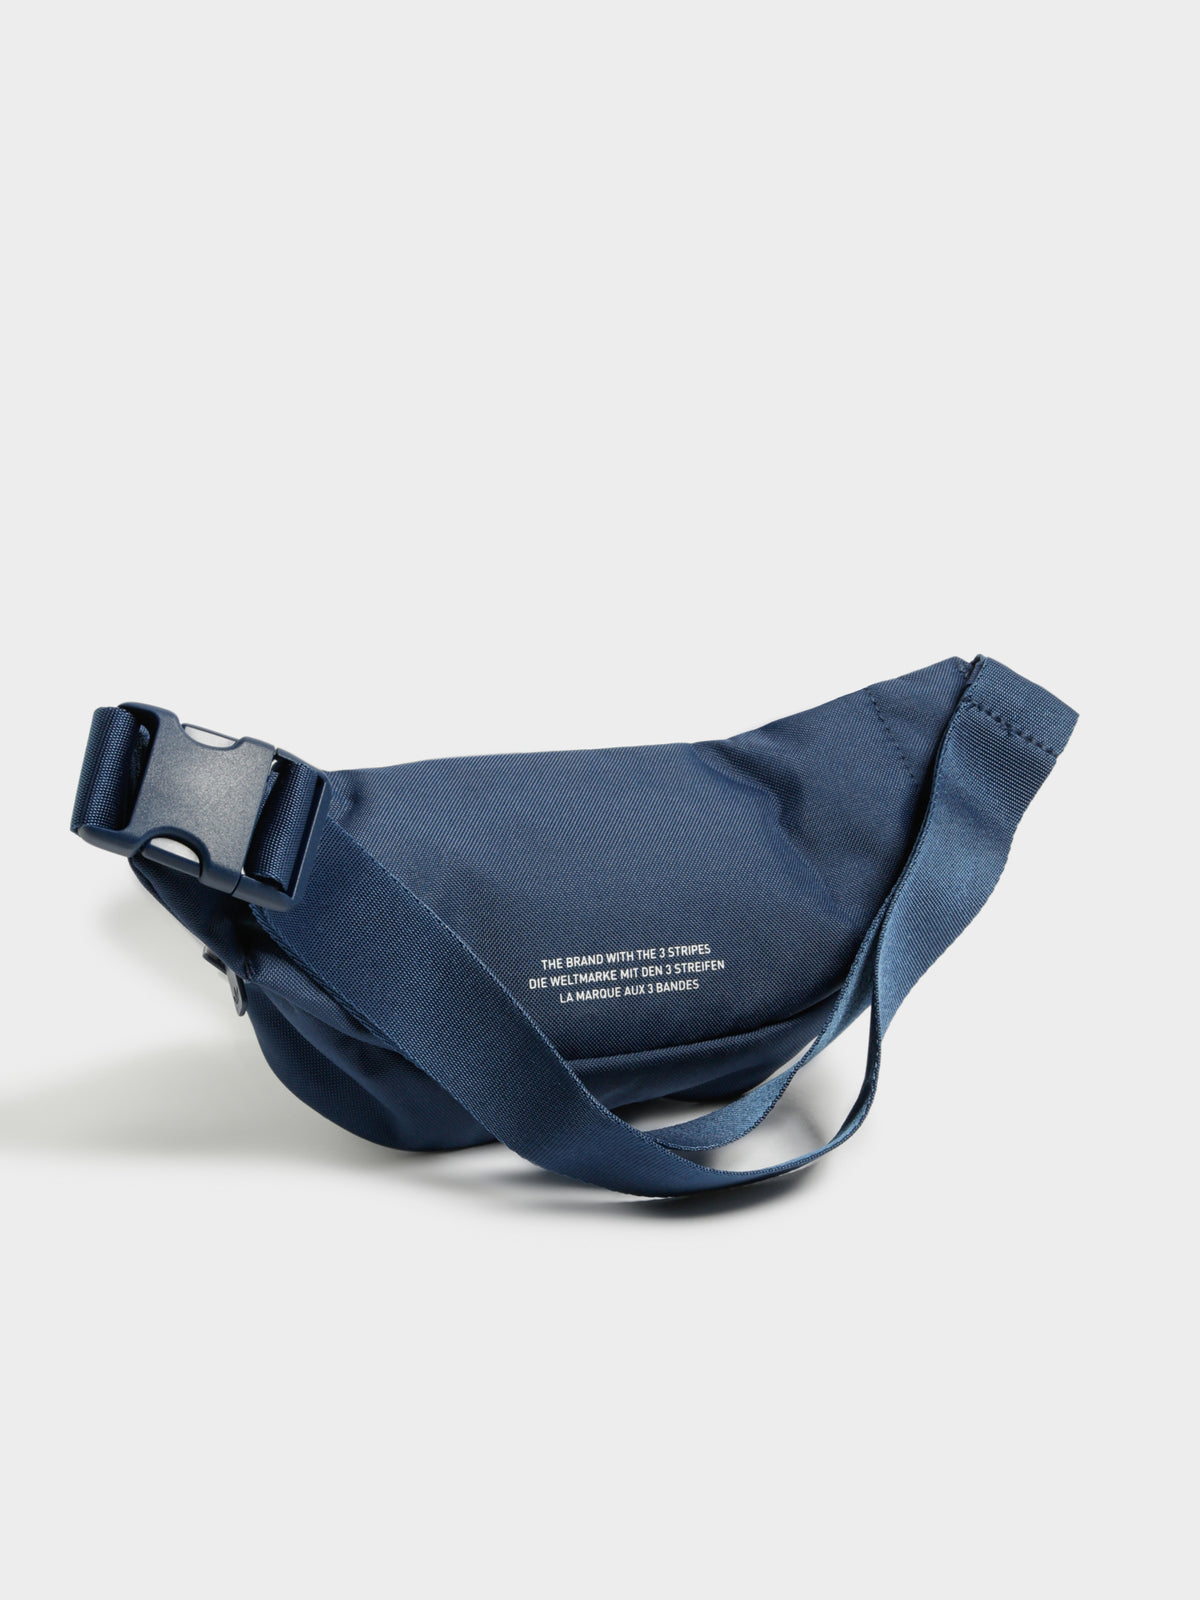 Essential Cross Body Bag in Night Marine Blue